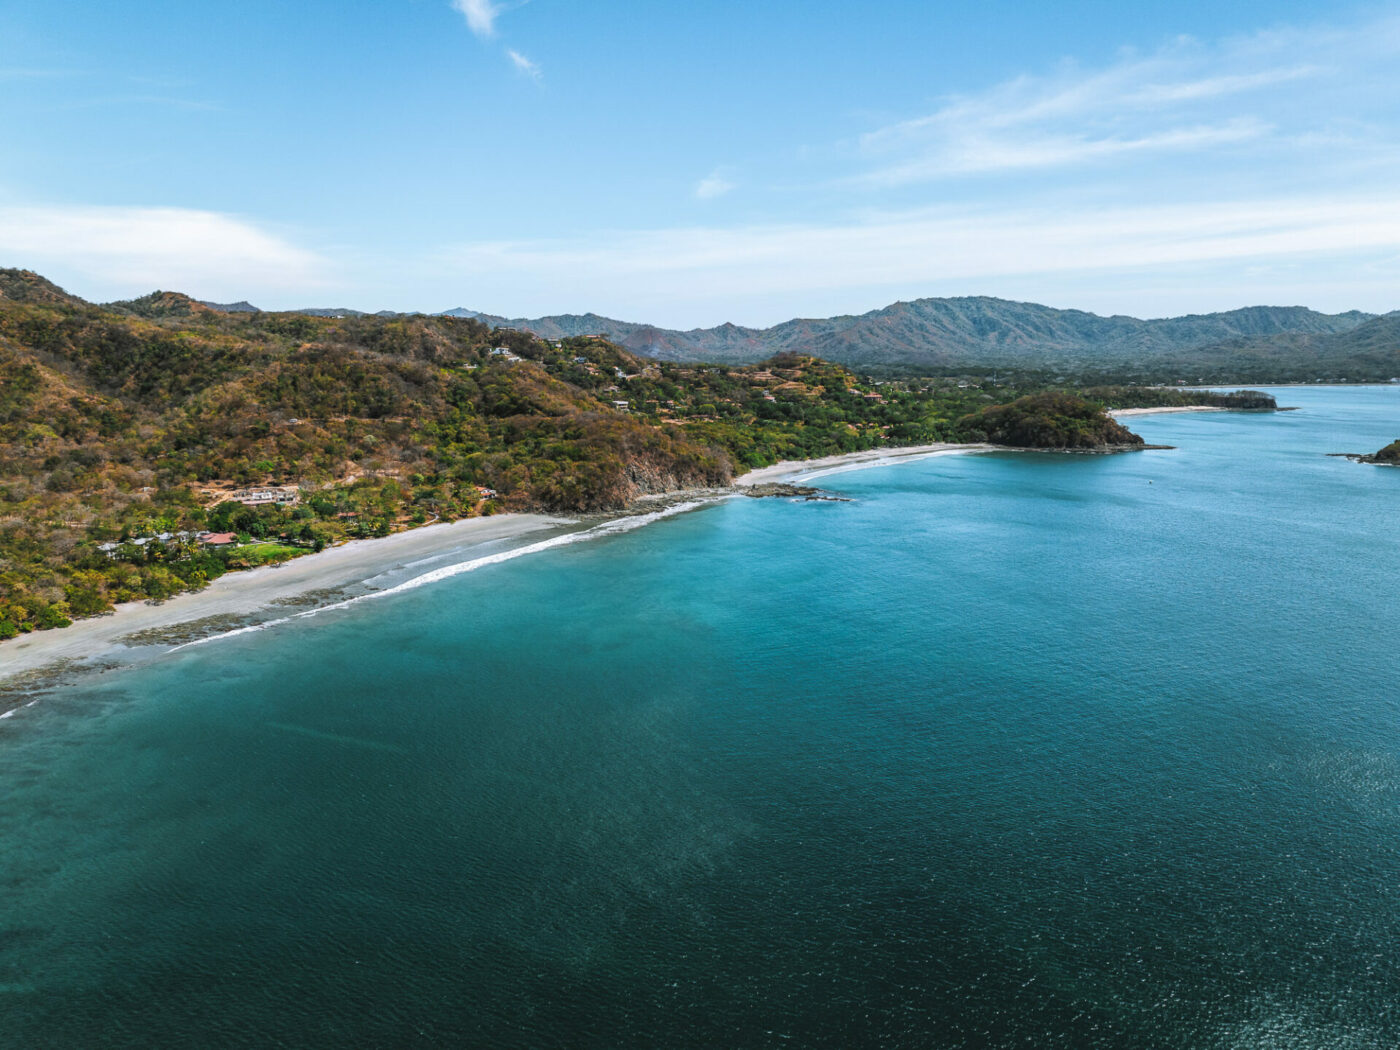 Las Catalinas, the nearest shore to Catalinas Islands